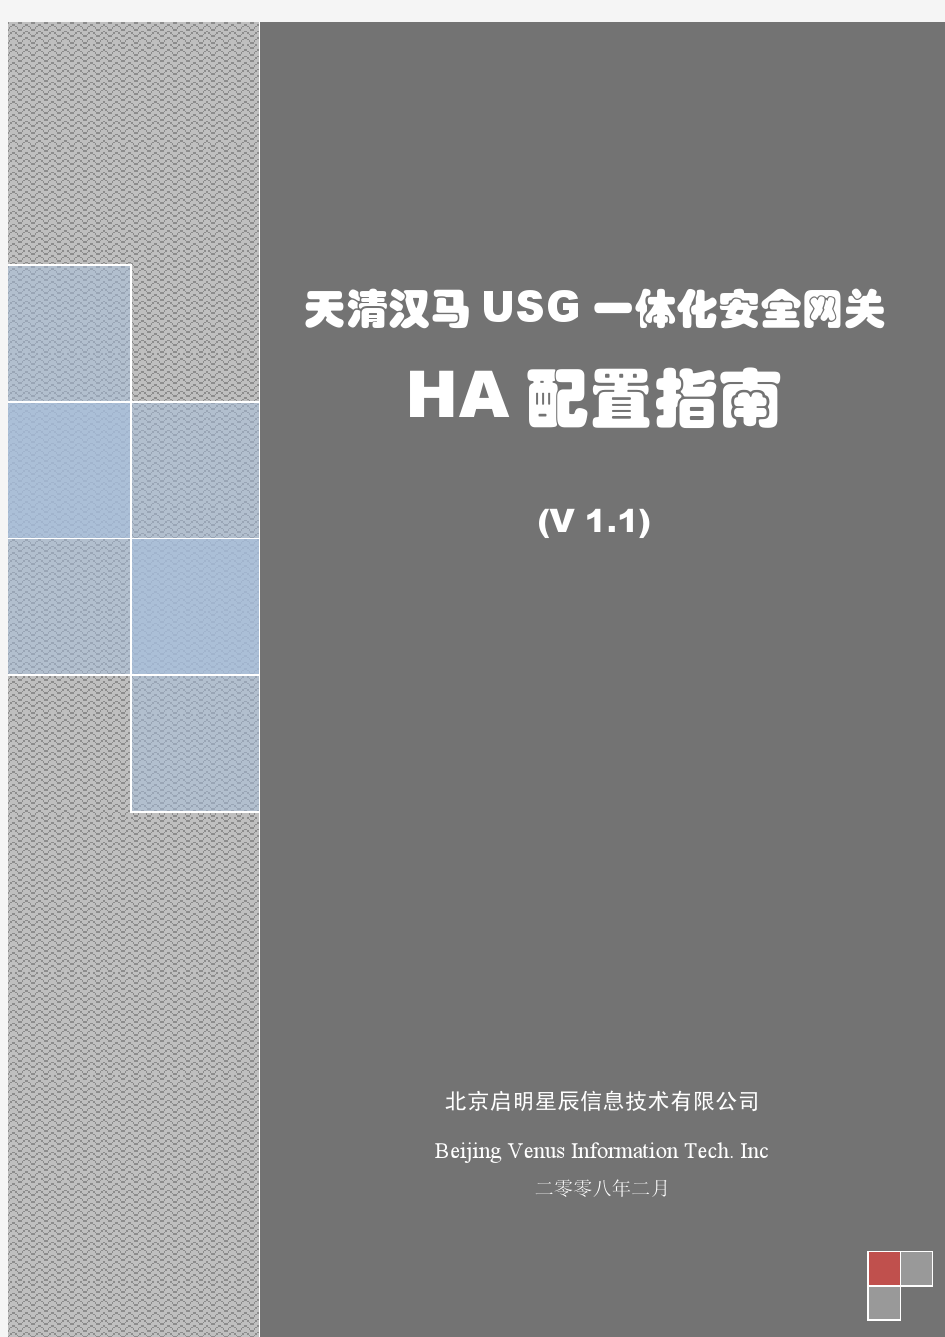 20080218_天清汉马USG系列_HA配置指南_V1.1